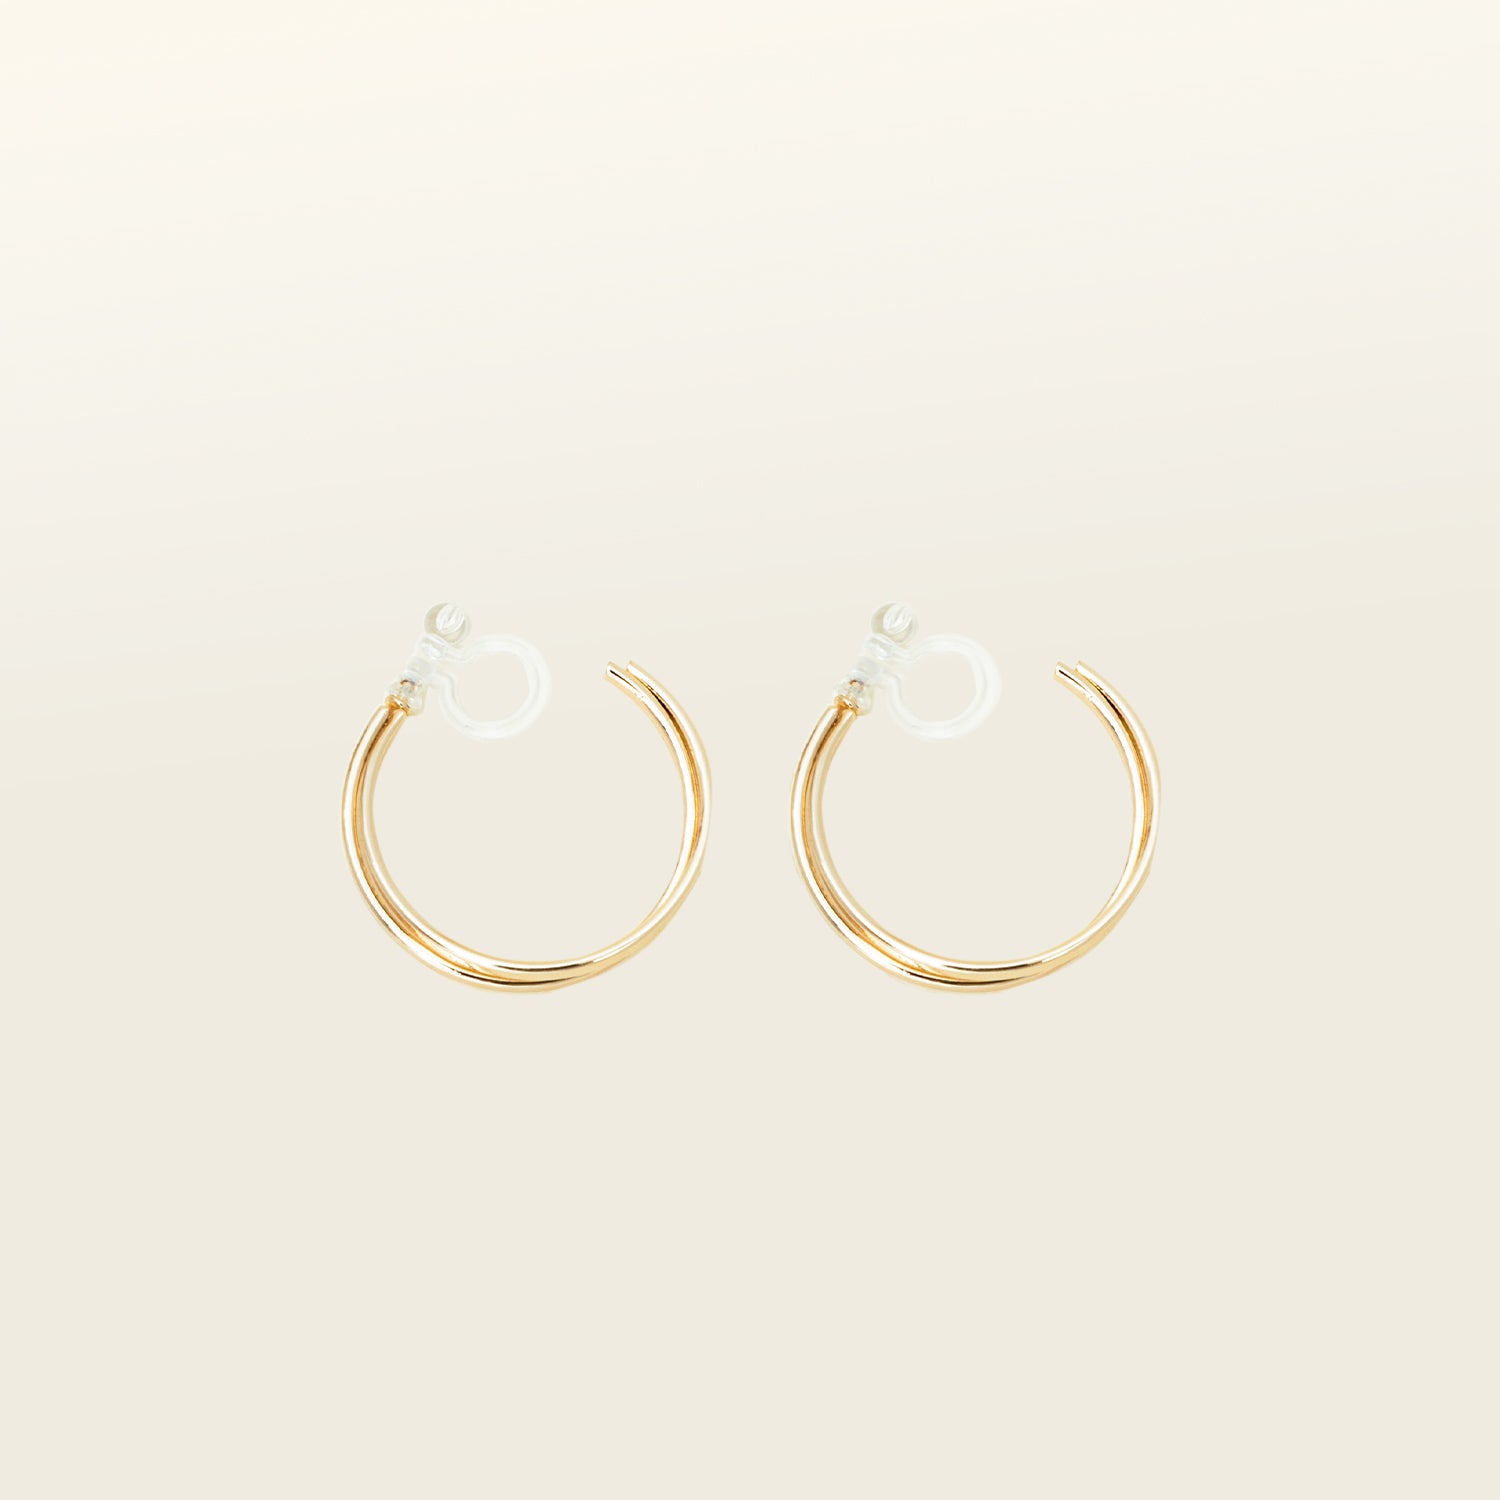 1gram gold J type earring for women ad girl collection